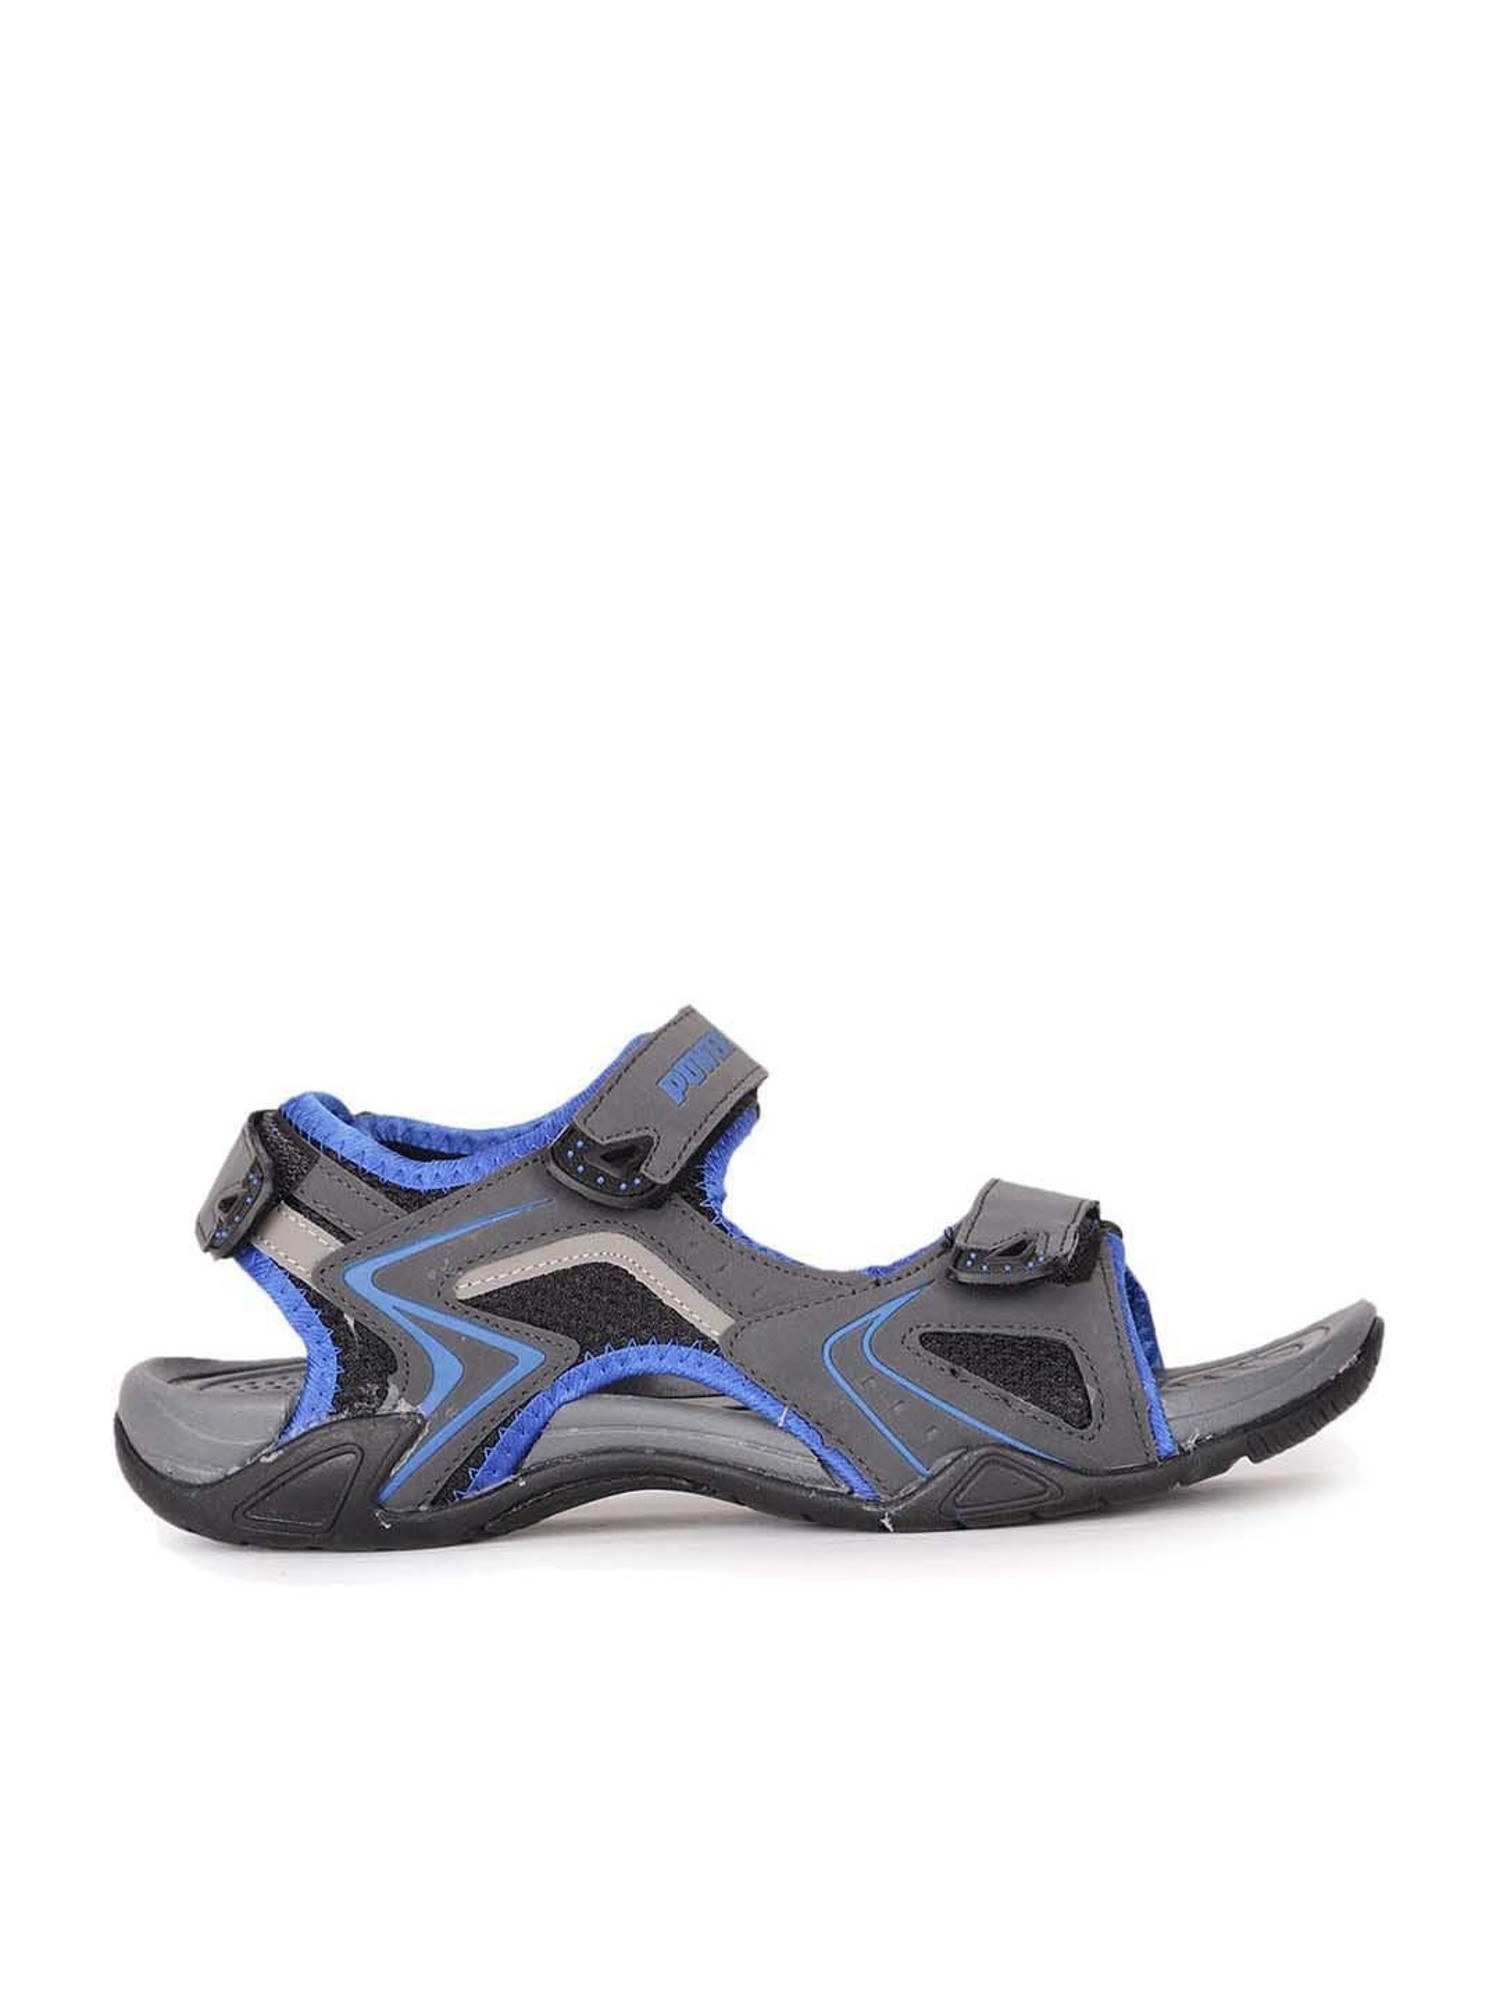 Bata Sandals For Men - Shop Latest Men Bata Sandals Online | Myntra